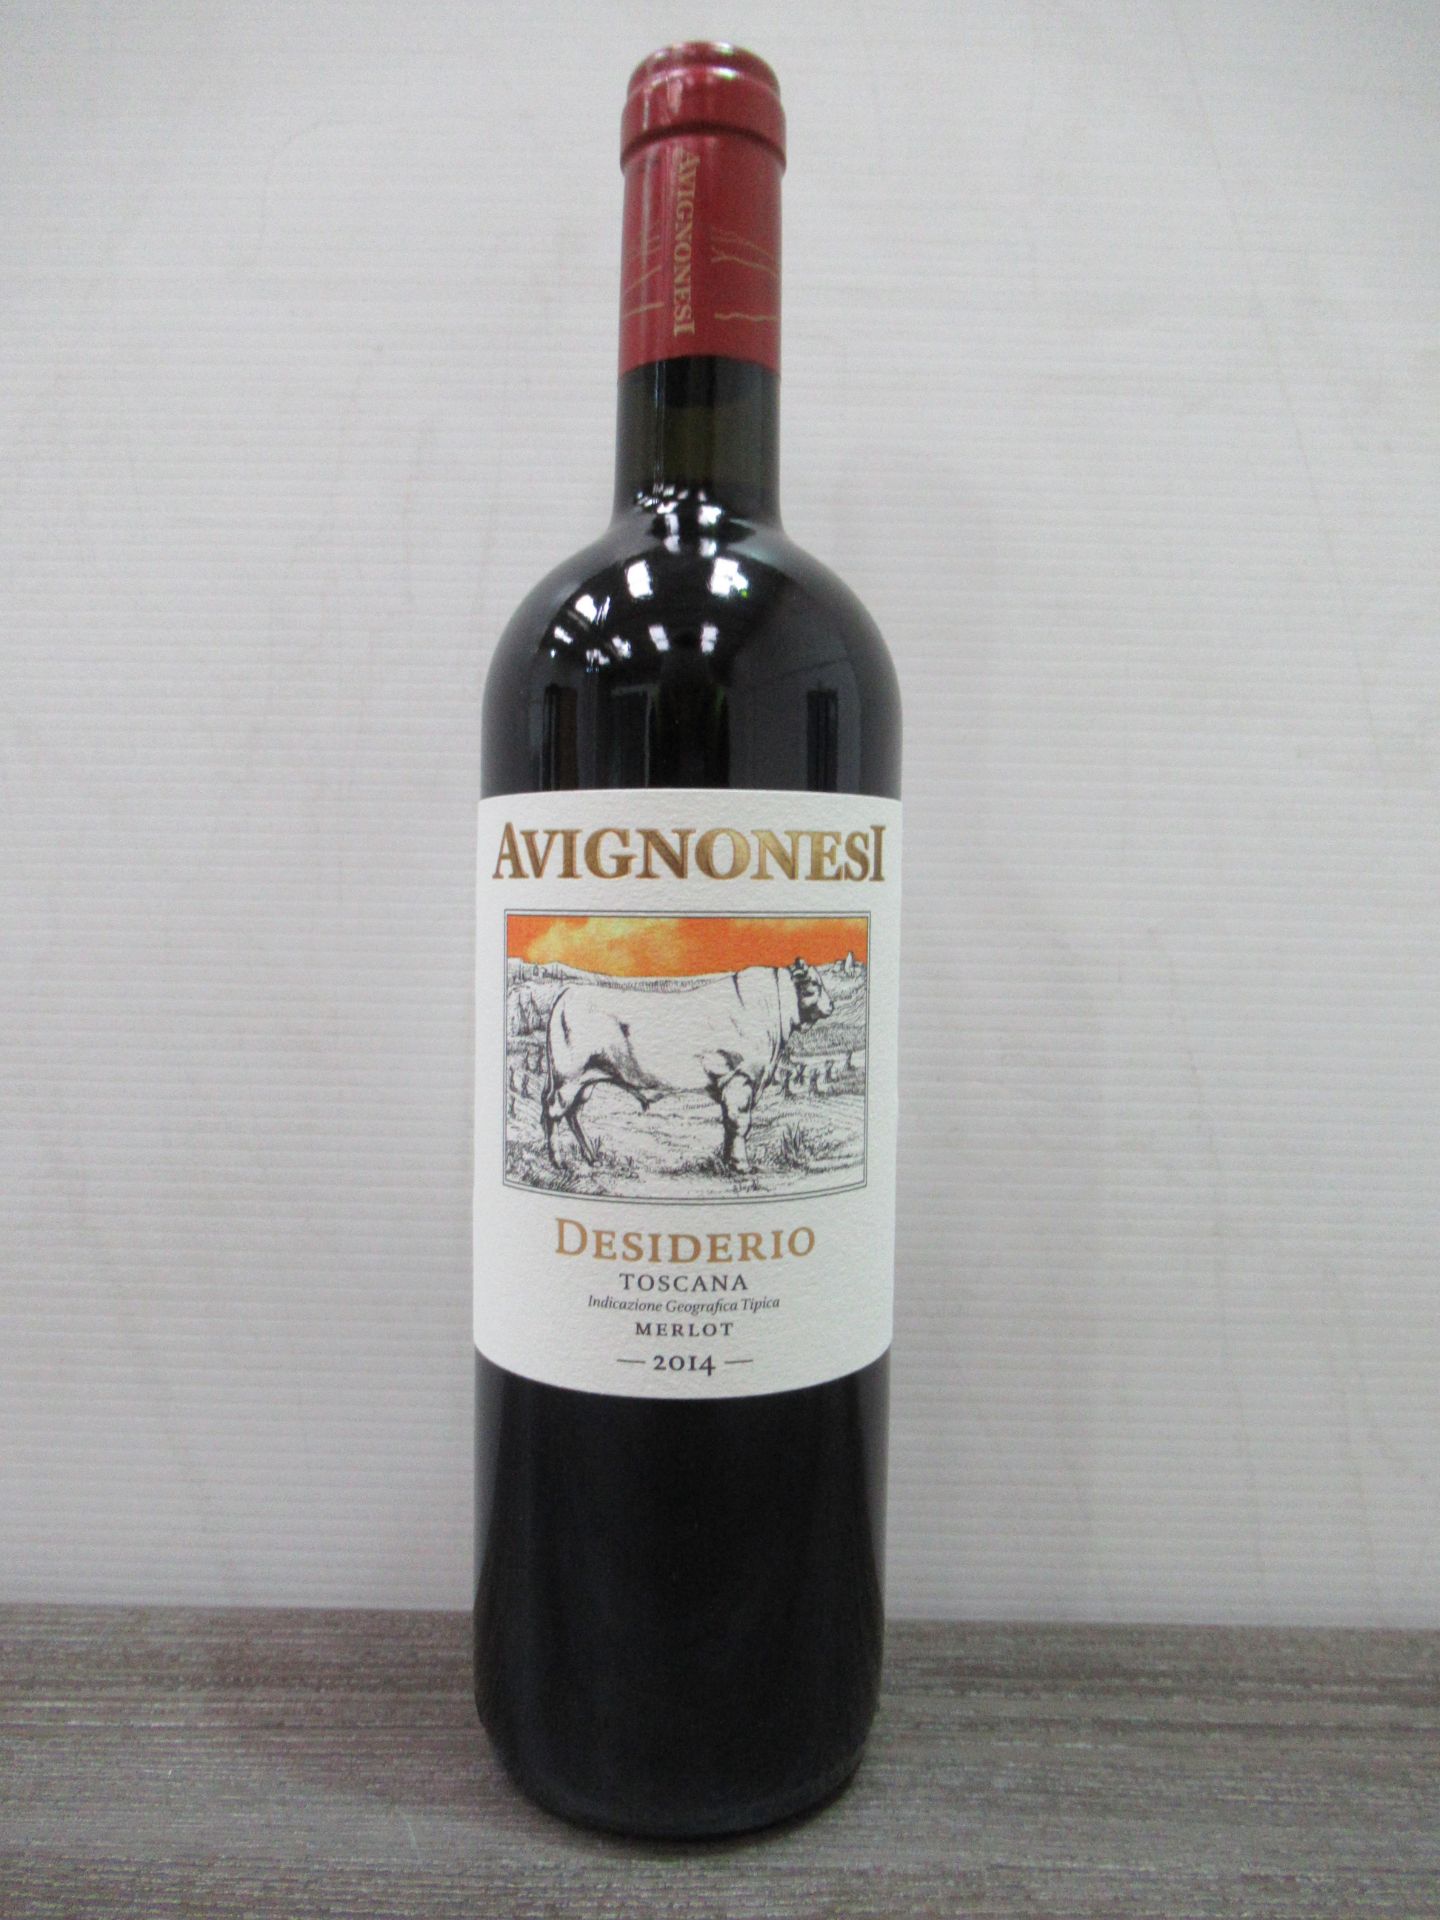 6 x Bottles of Avignonesi Desiderio Toscana Merlot IGT 2014